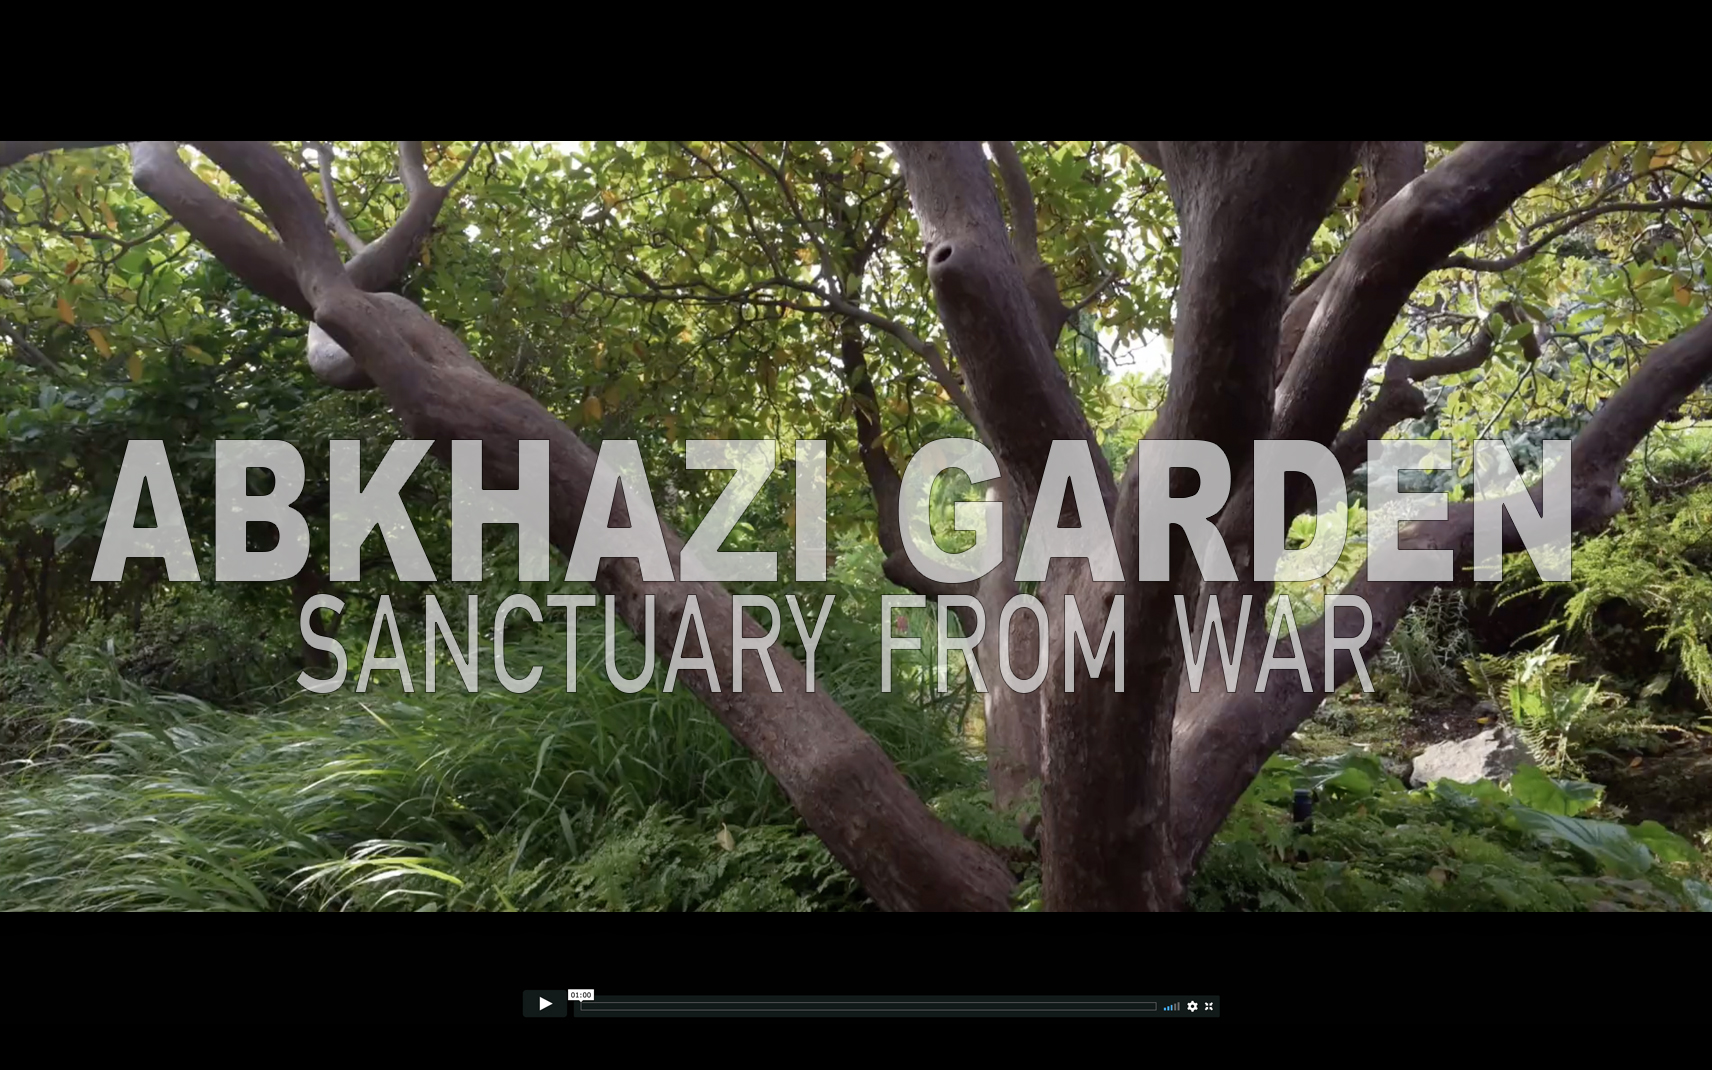 Abkhazi Garden Film Trailer